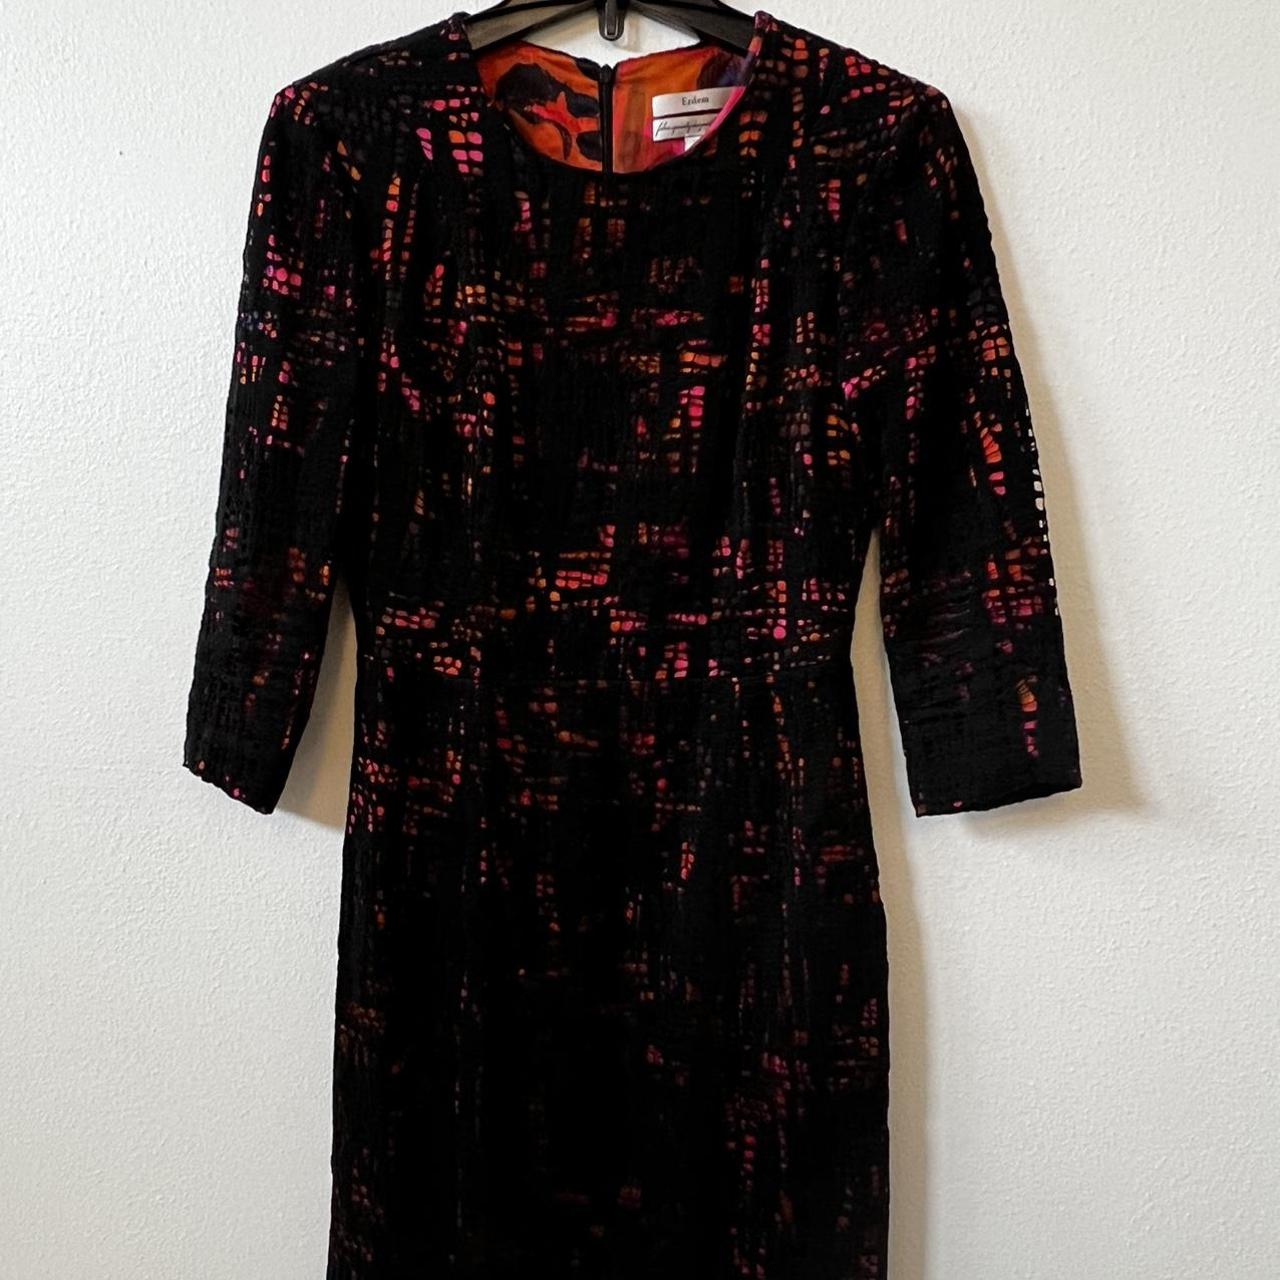 Erdem Women's Red and Black Dress